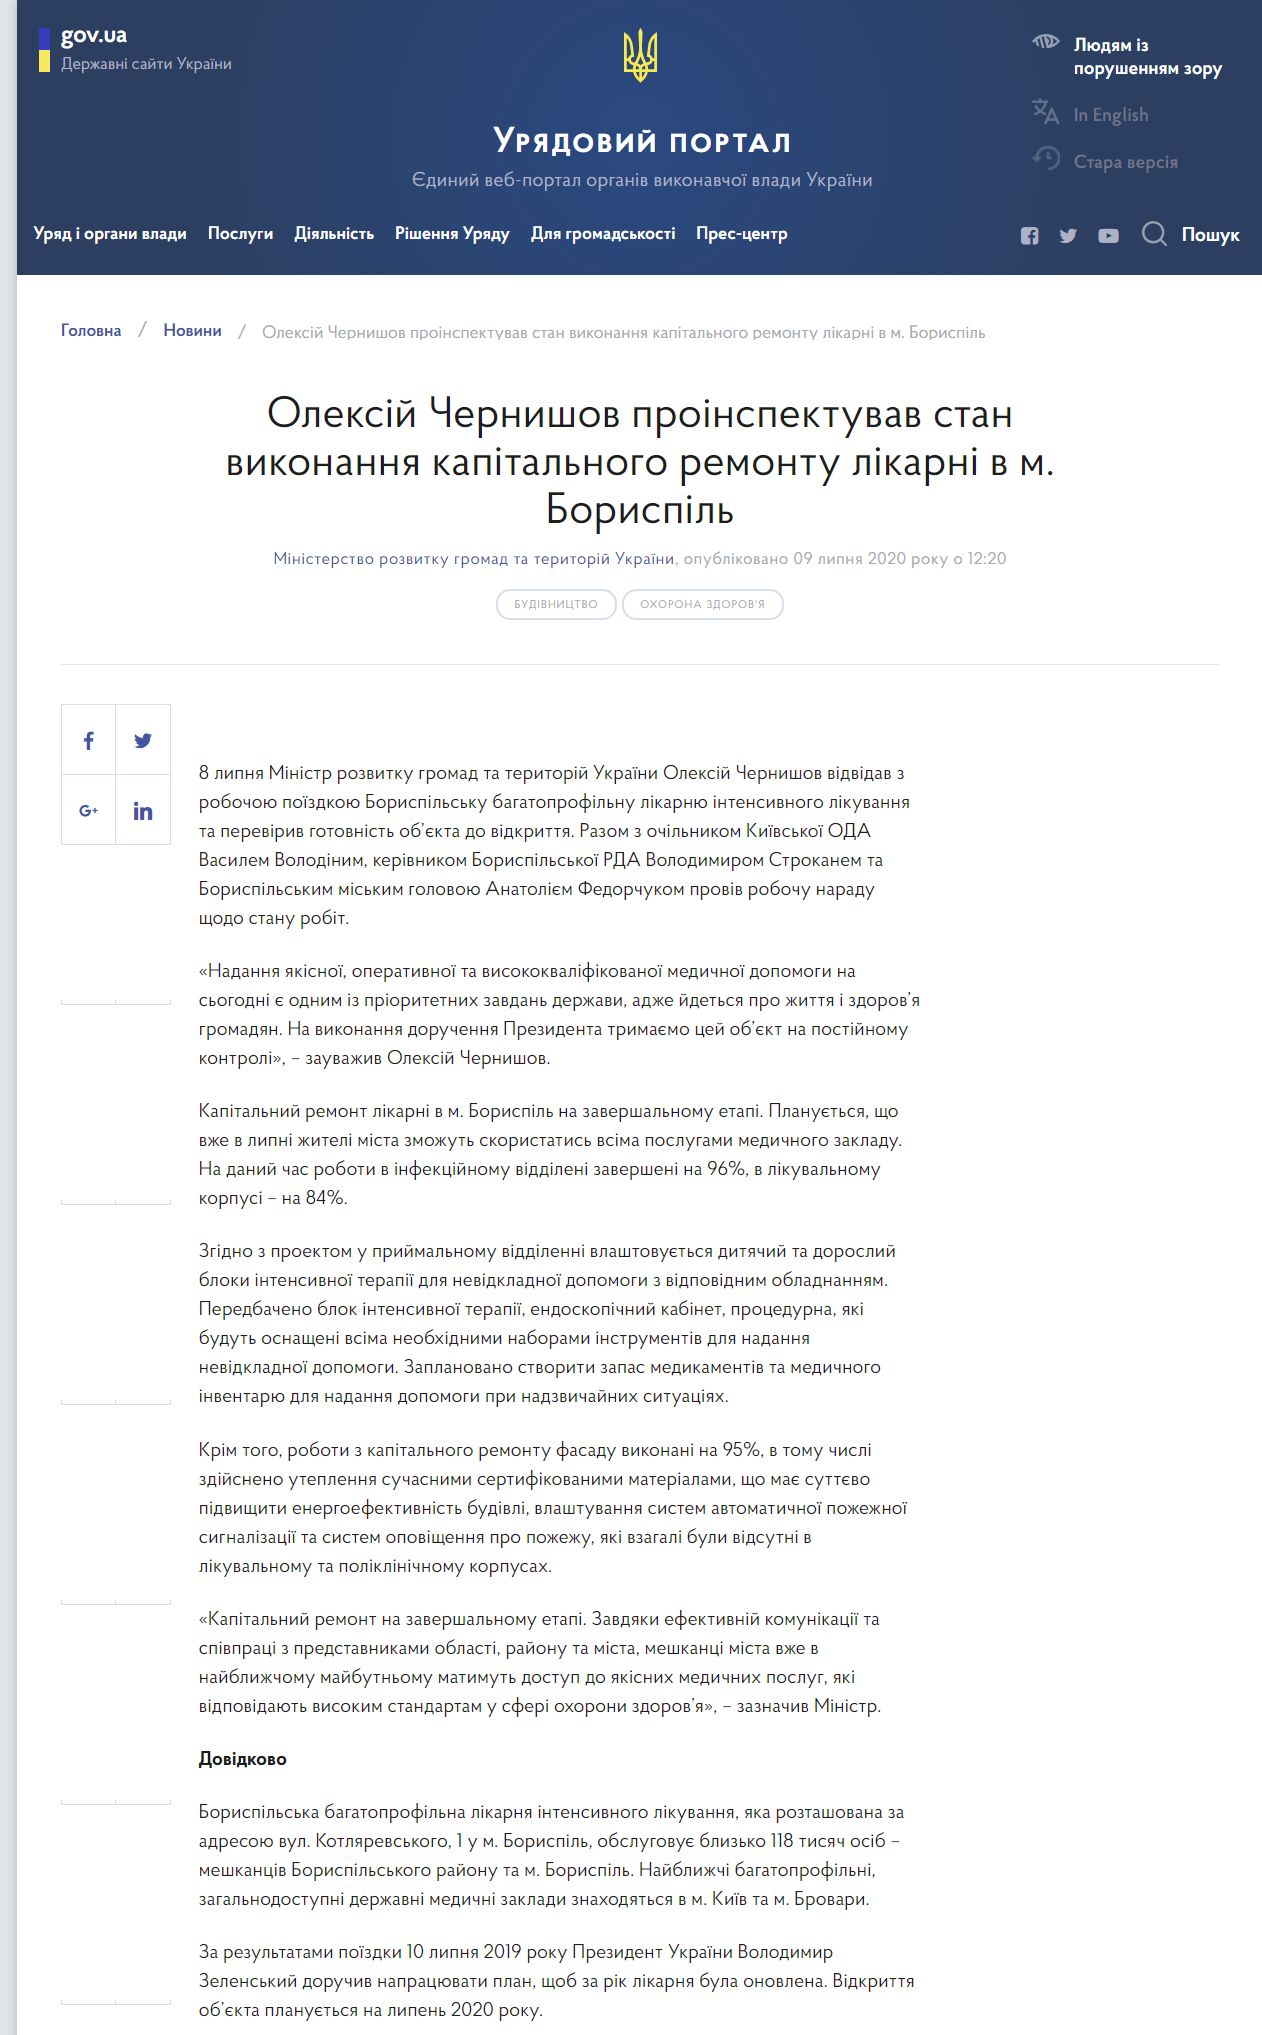 https://www.kmu.gov.ua/news/oleksij-chernishov-proinspektuvav-stan-vikonannya-kapitalnogo-remontu-likarni-v-m-borispil